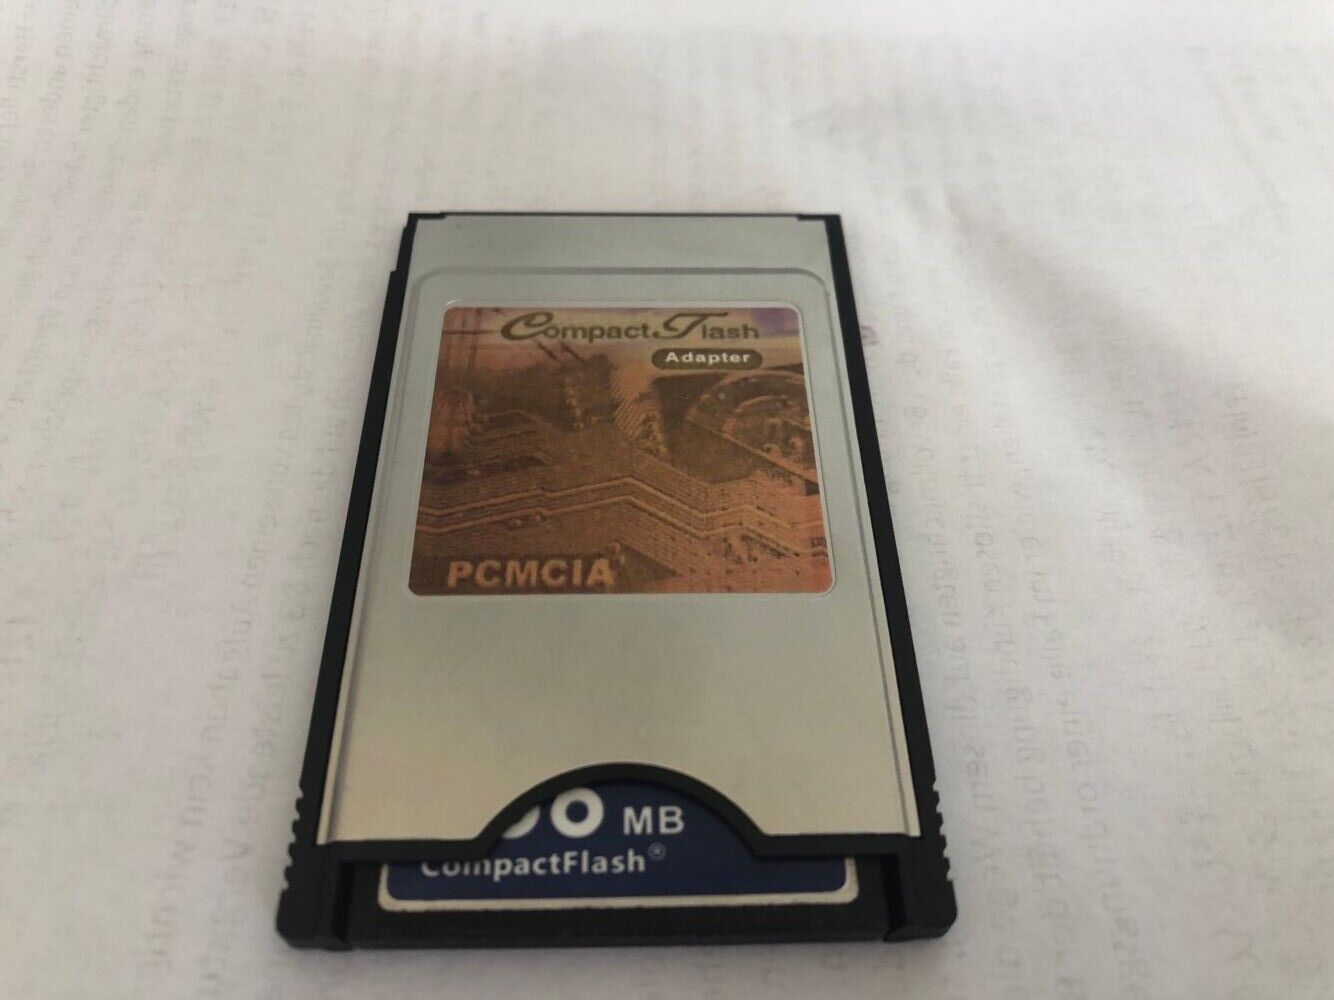 SANDISK 256MB Compact Flash +ATA PC card PCMCIA Adapter JANOME Machine